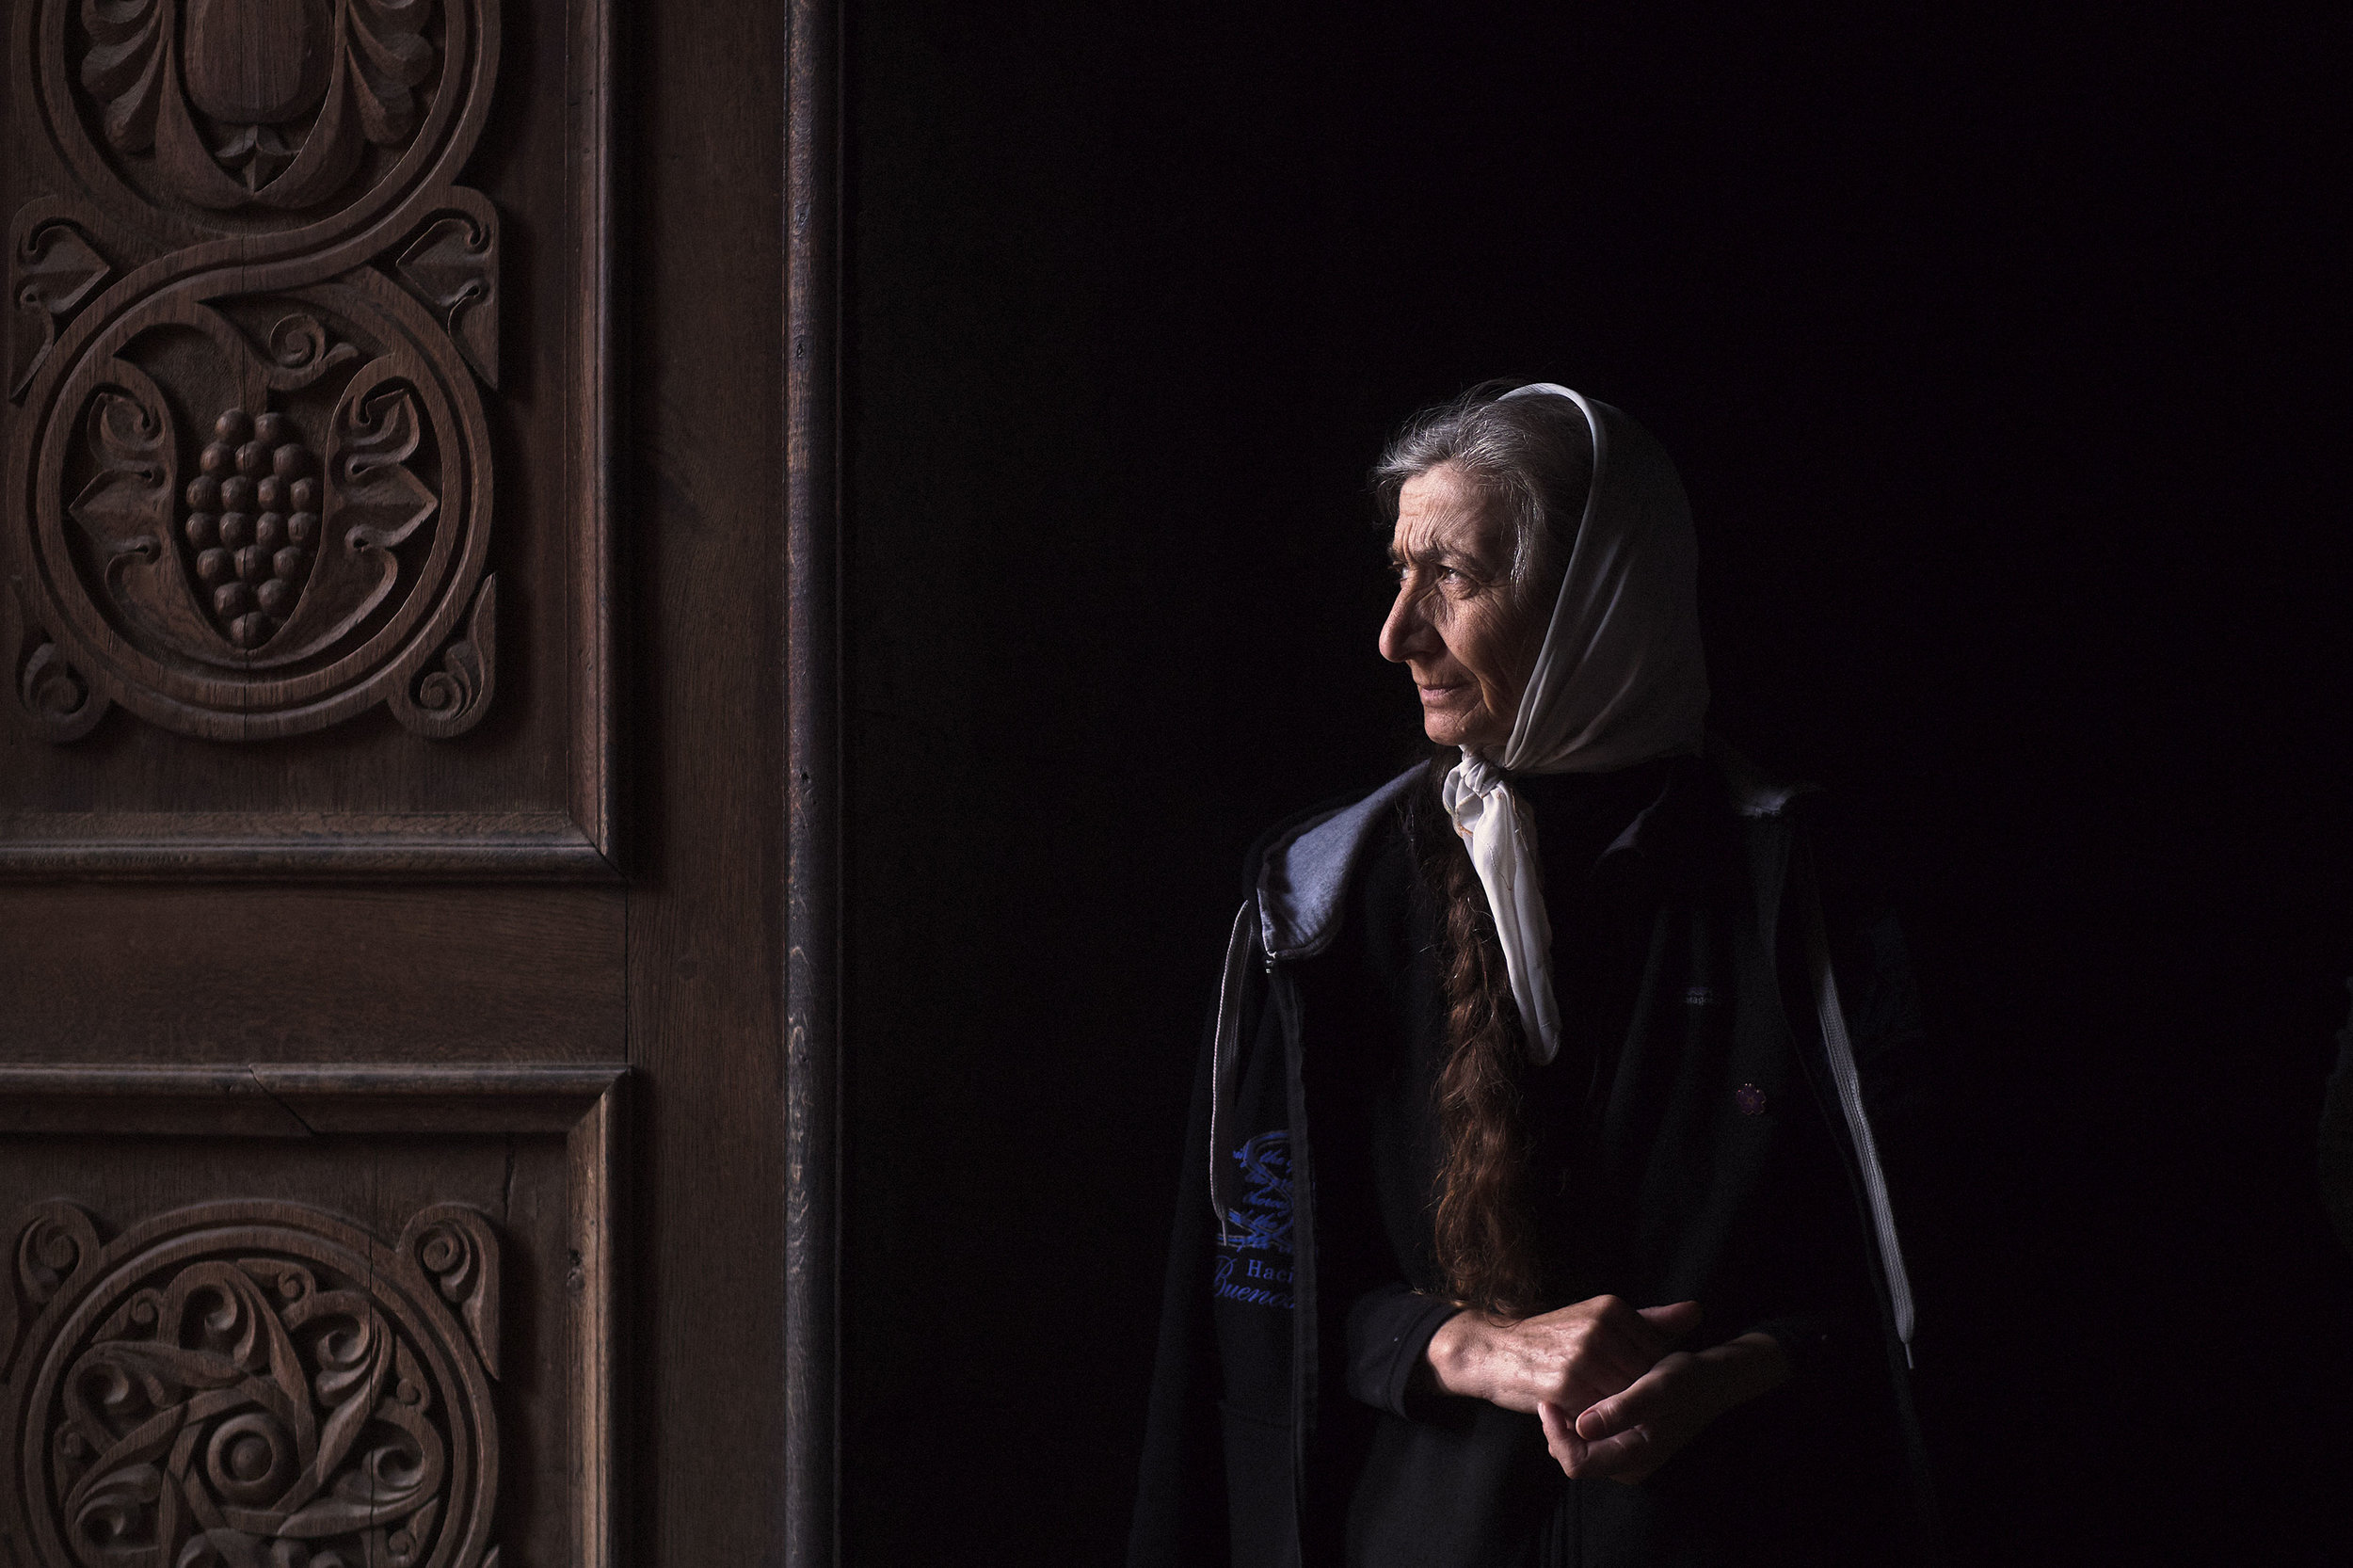 Armenia,-Tatev-monastery---woman-by-the-church-door_1144784.jpg